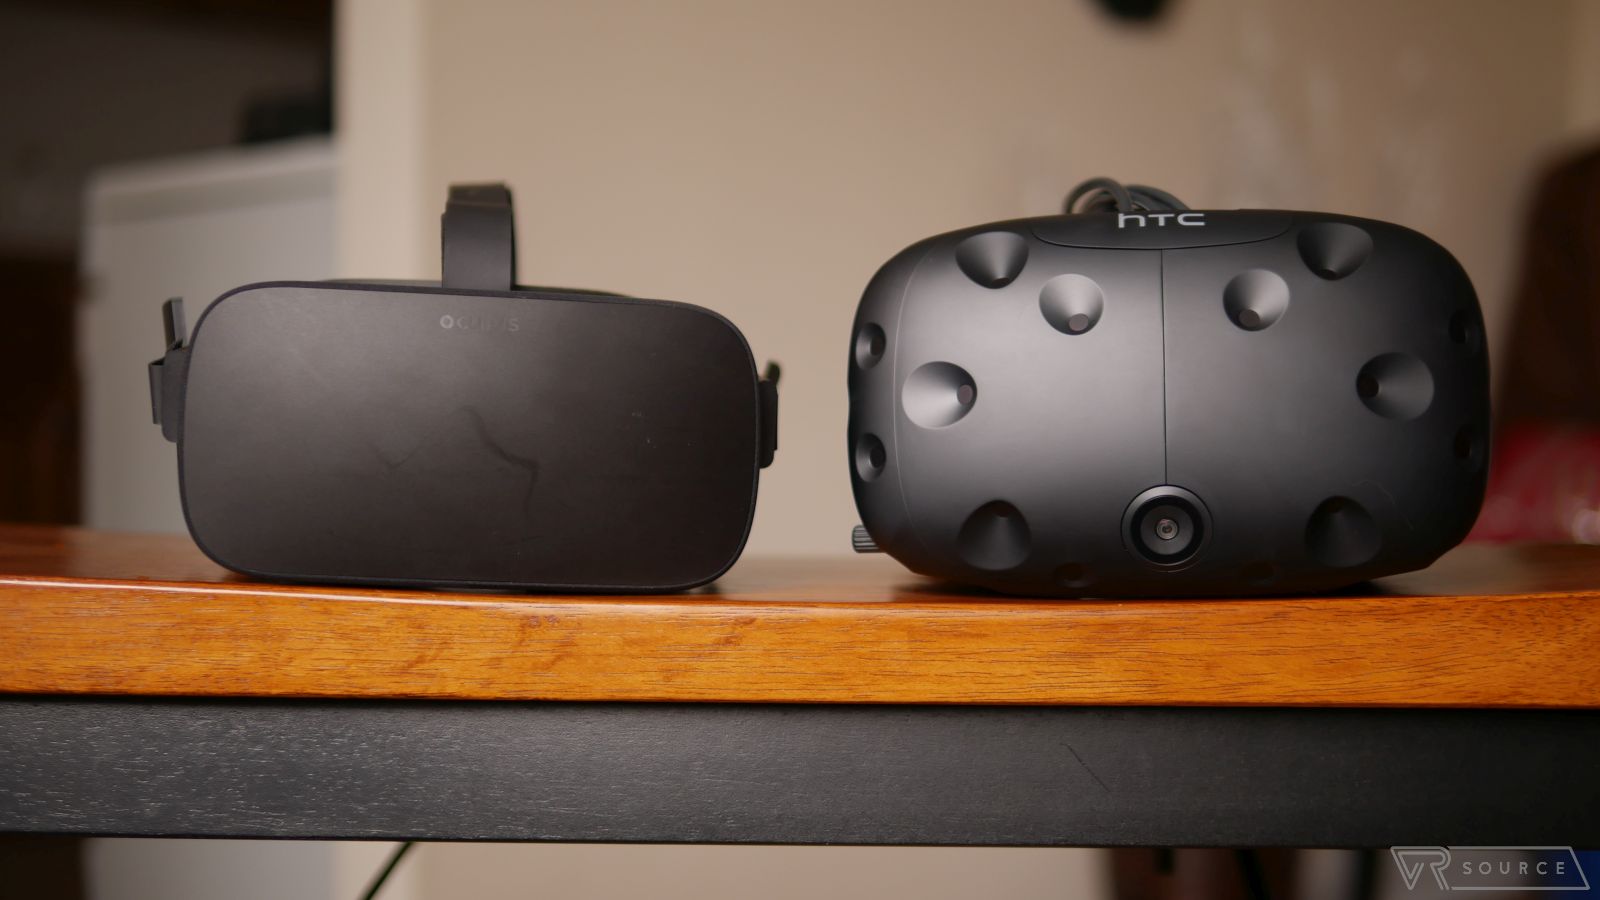  HTC Vive vs Oculus Rift 